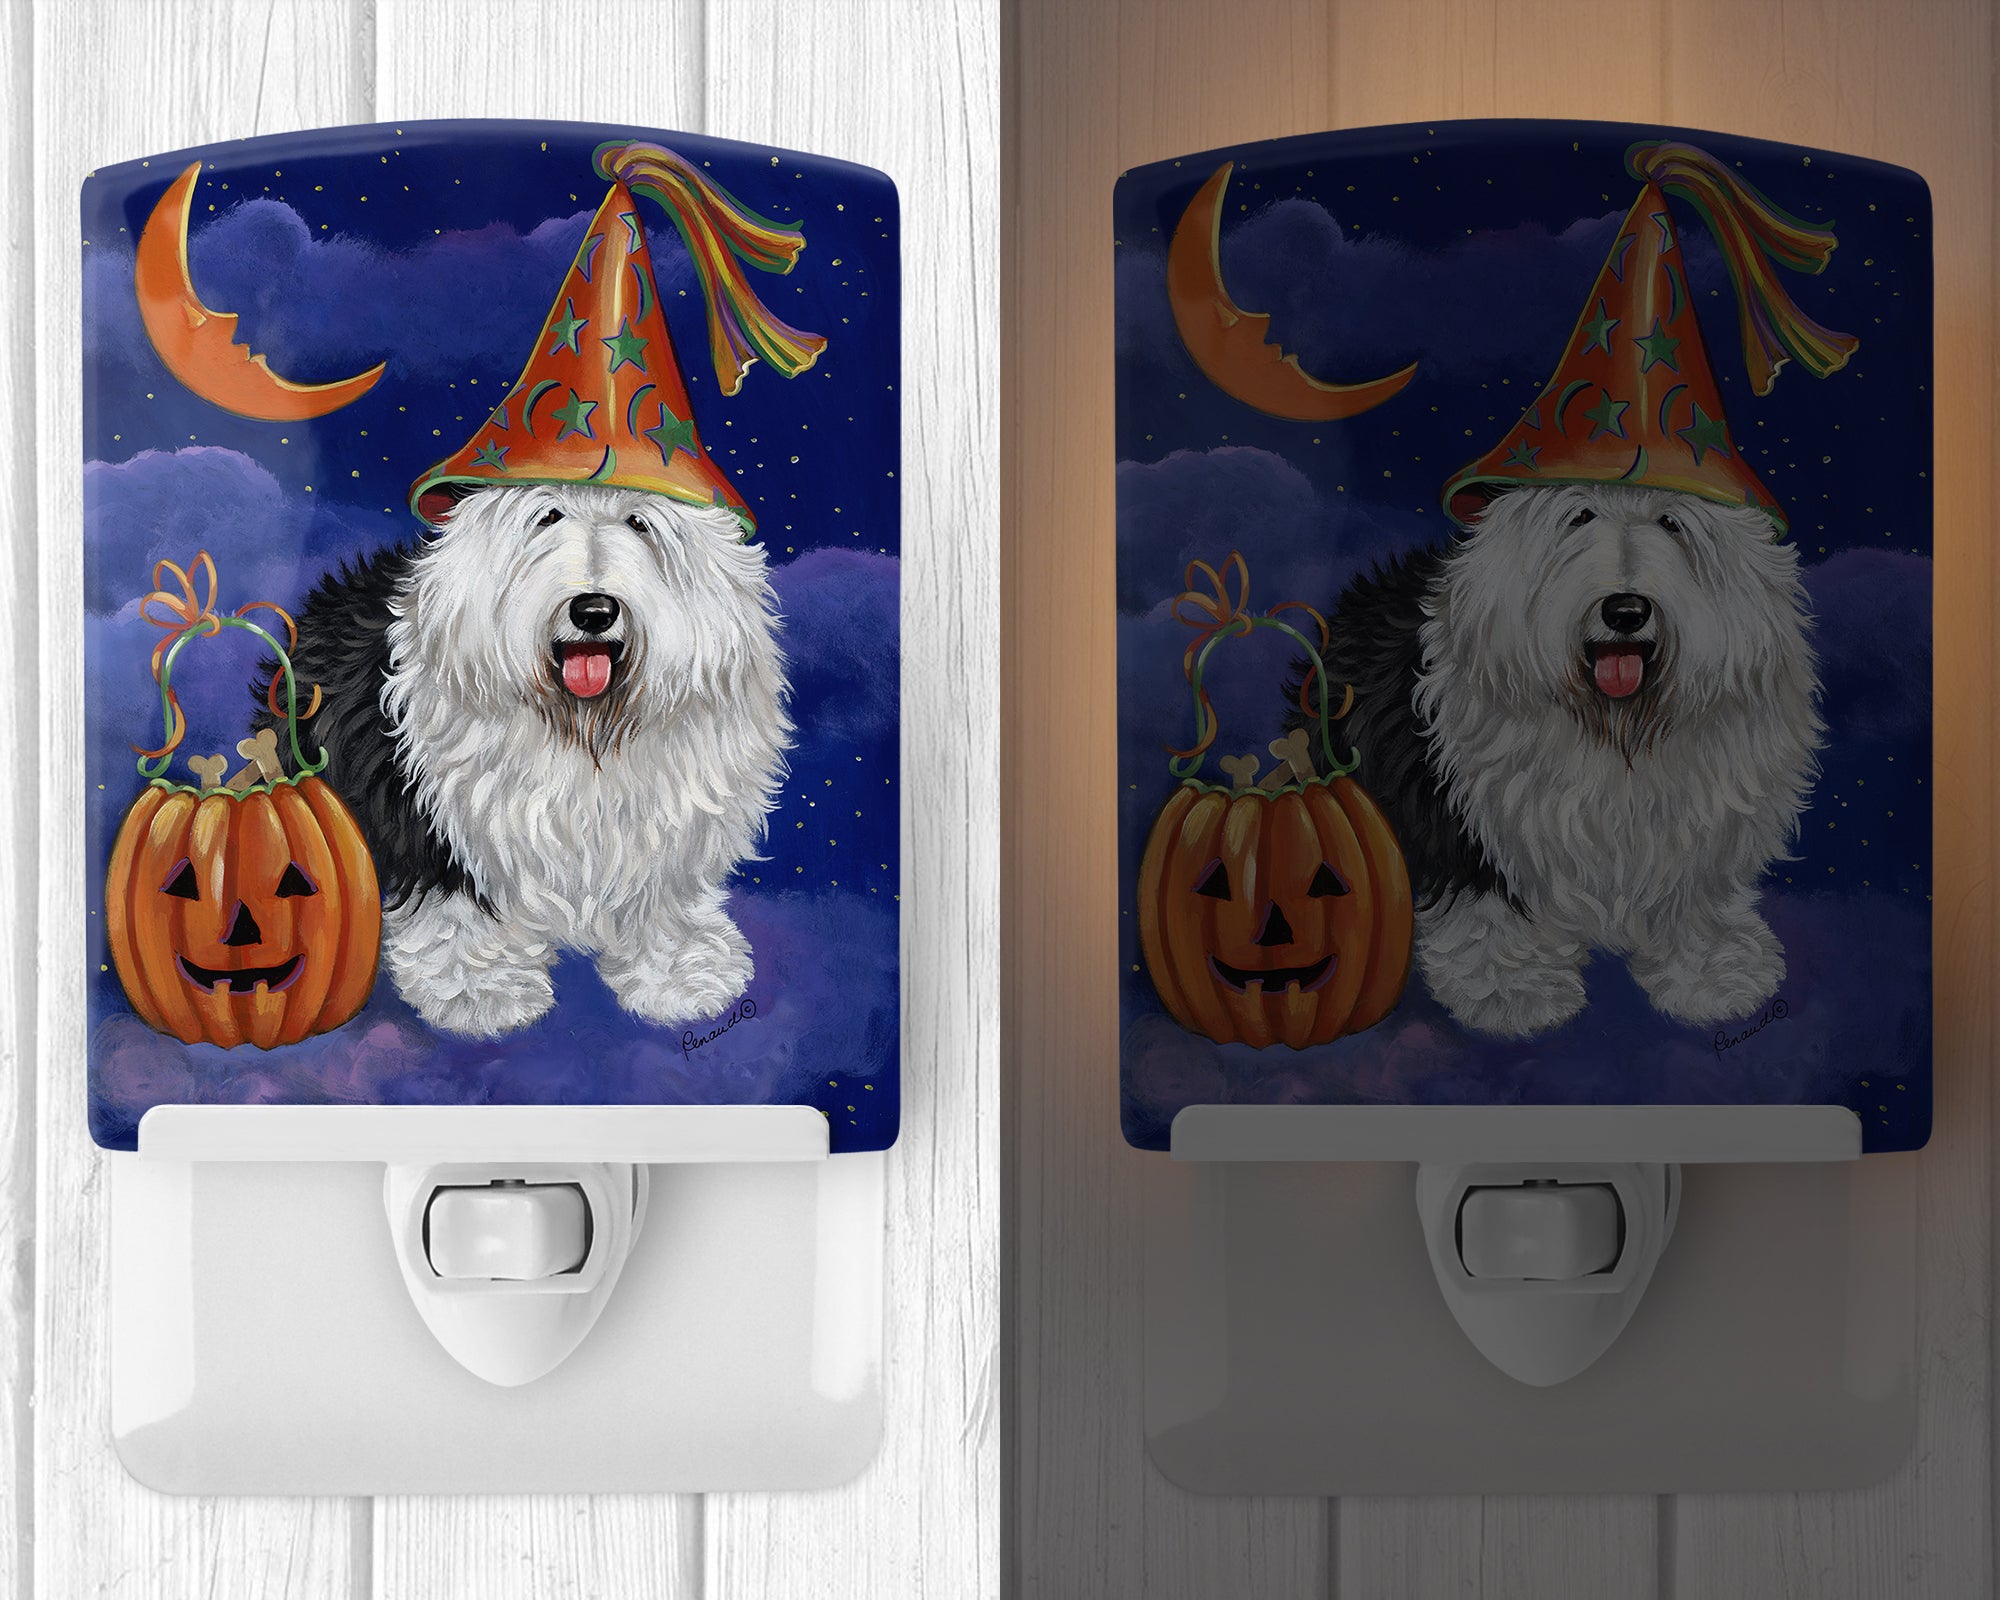 Old English Sheepdog Halloween Ceramic Night Light PPP3118CNL - the-store.com